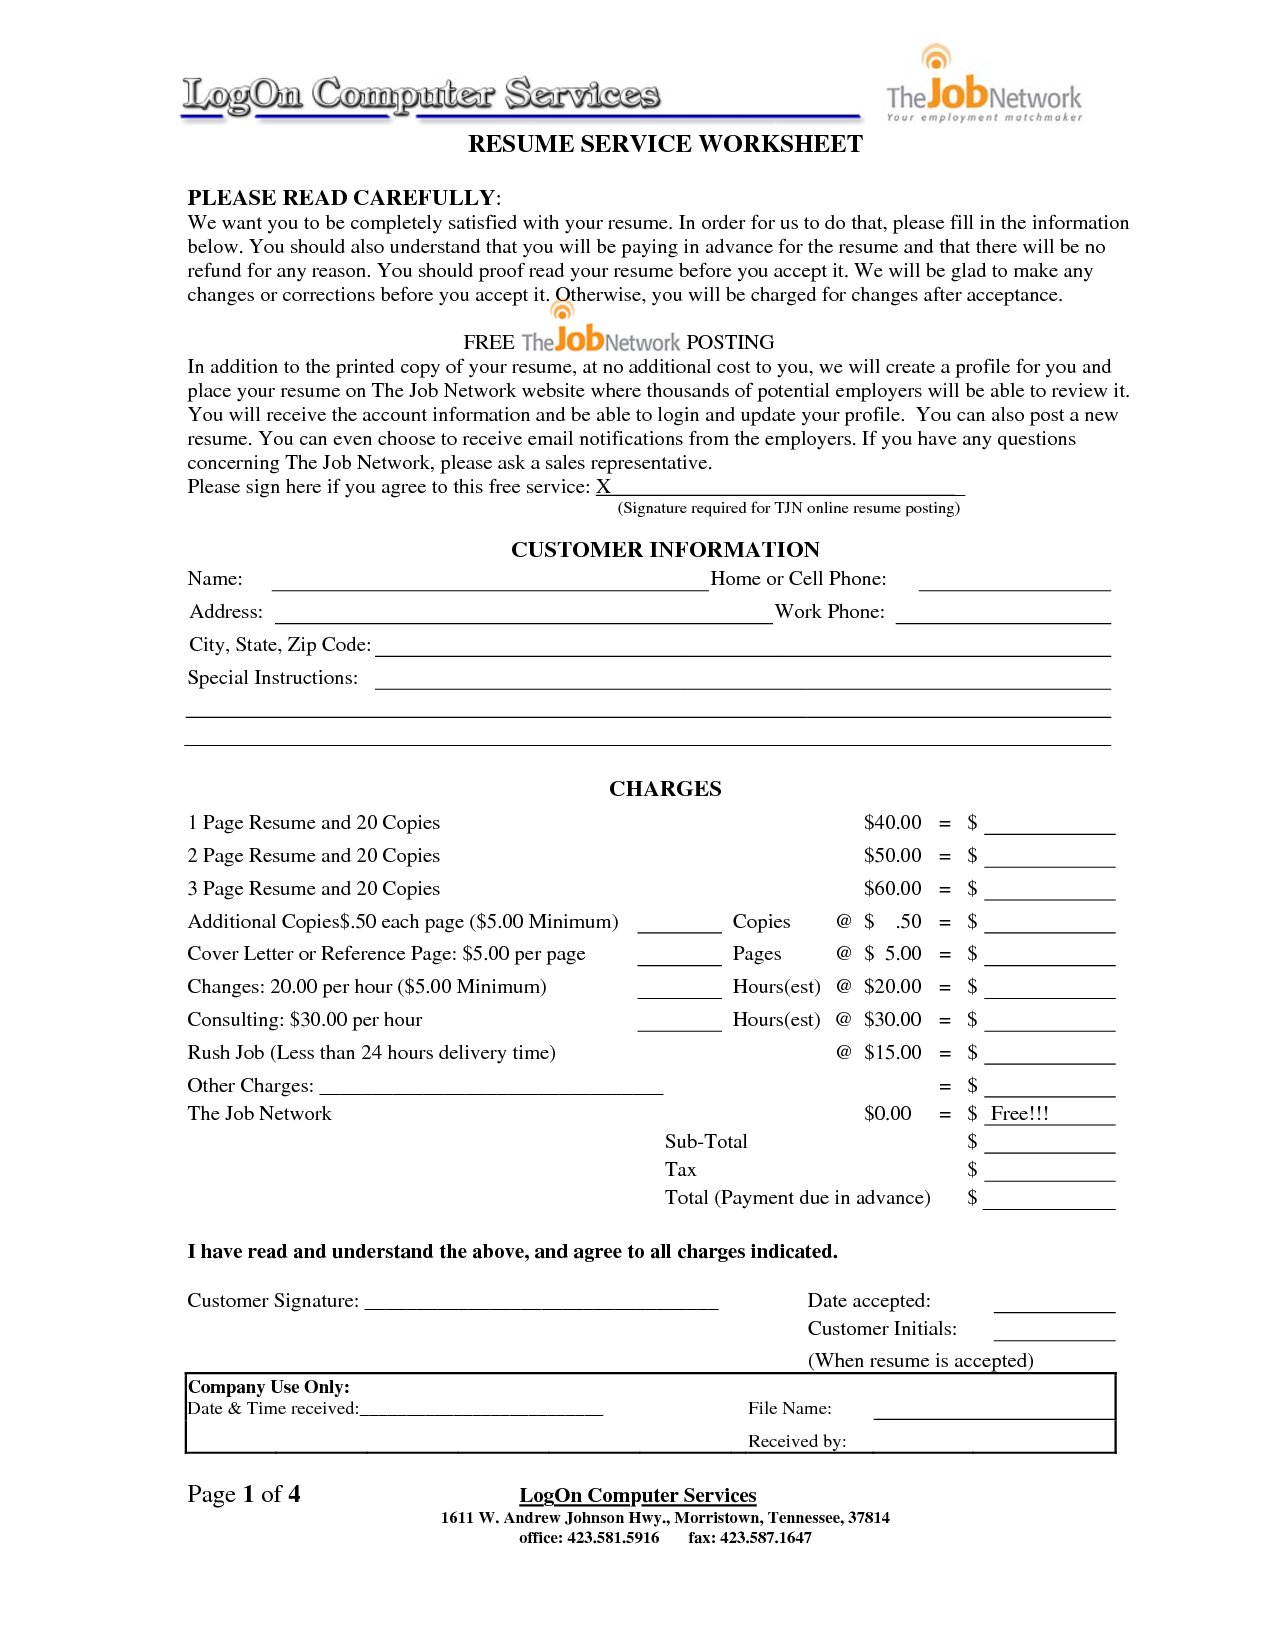 Free Printable Resume Worksheet Image